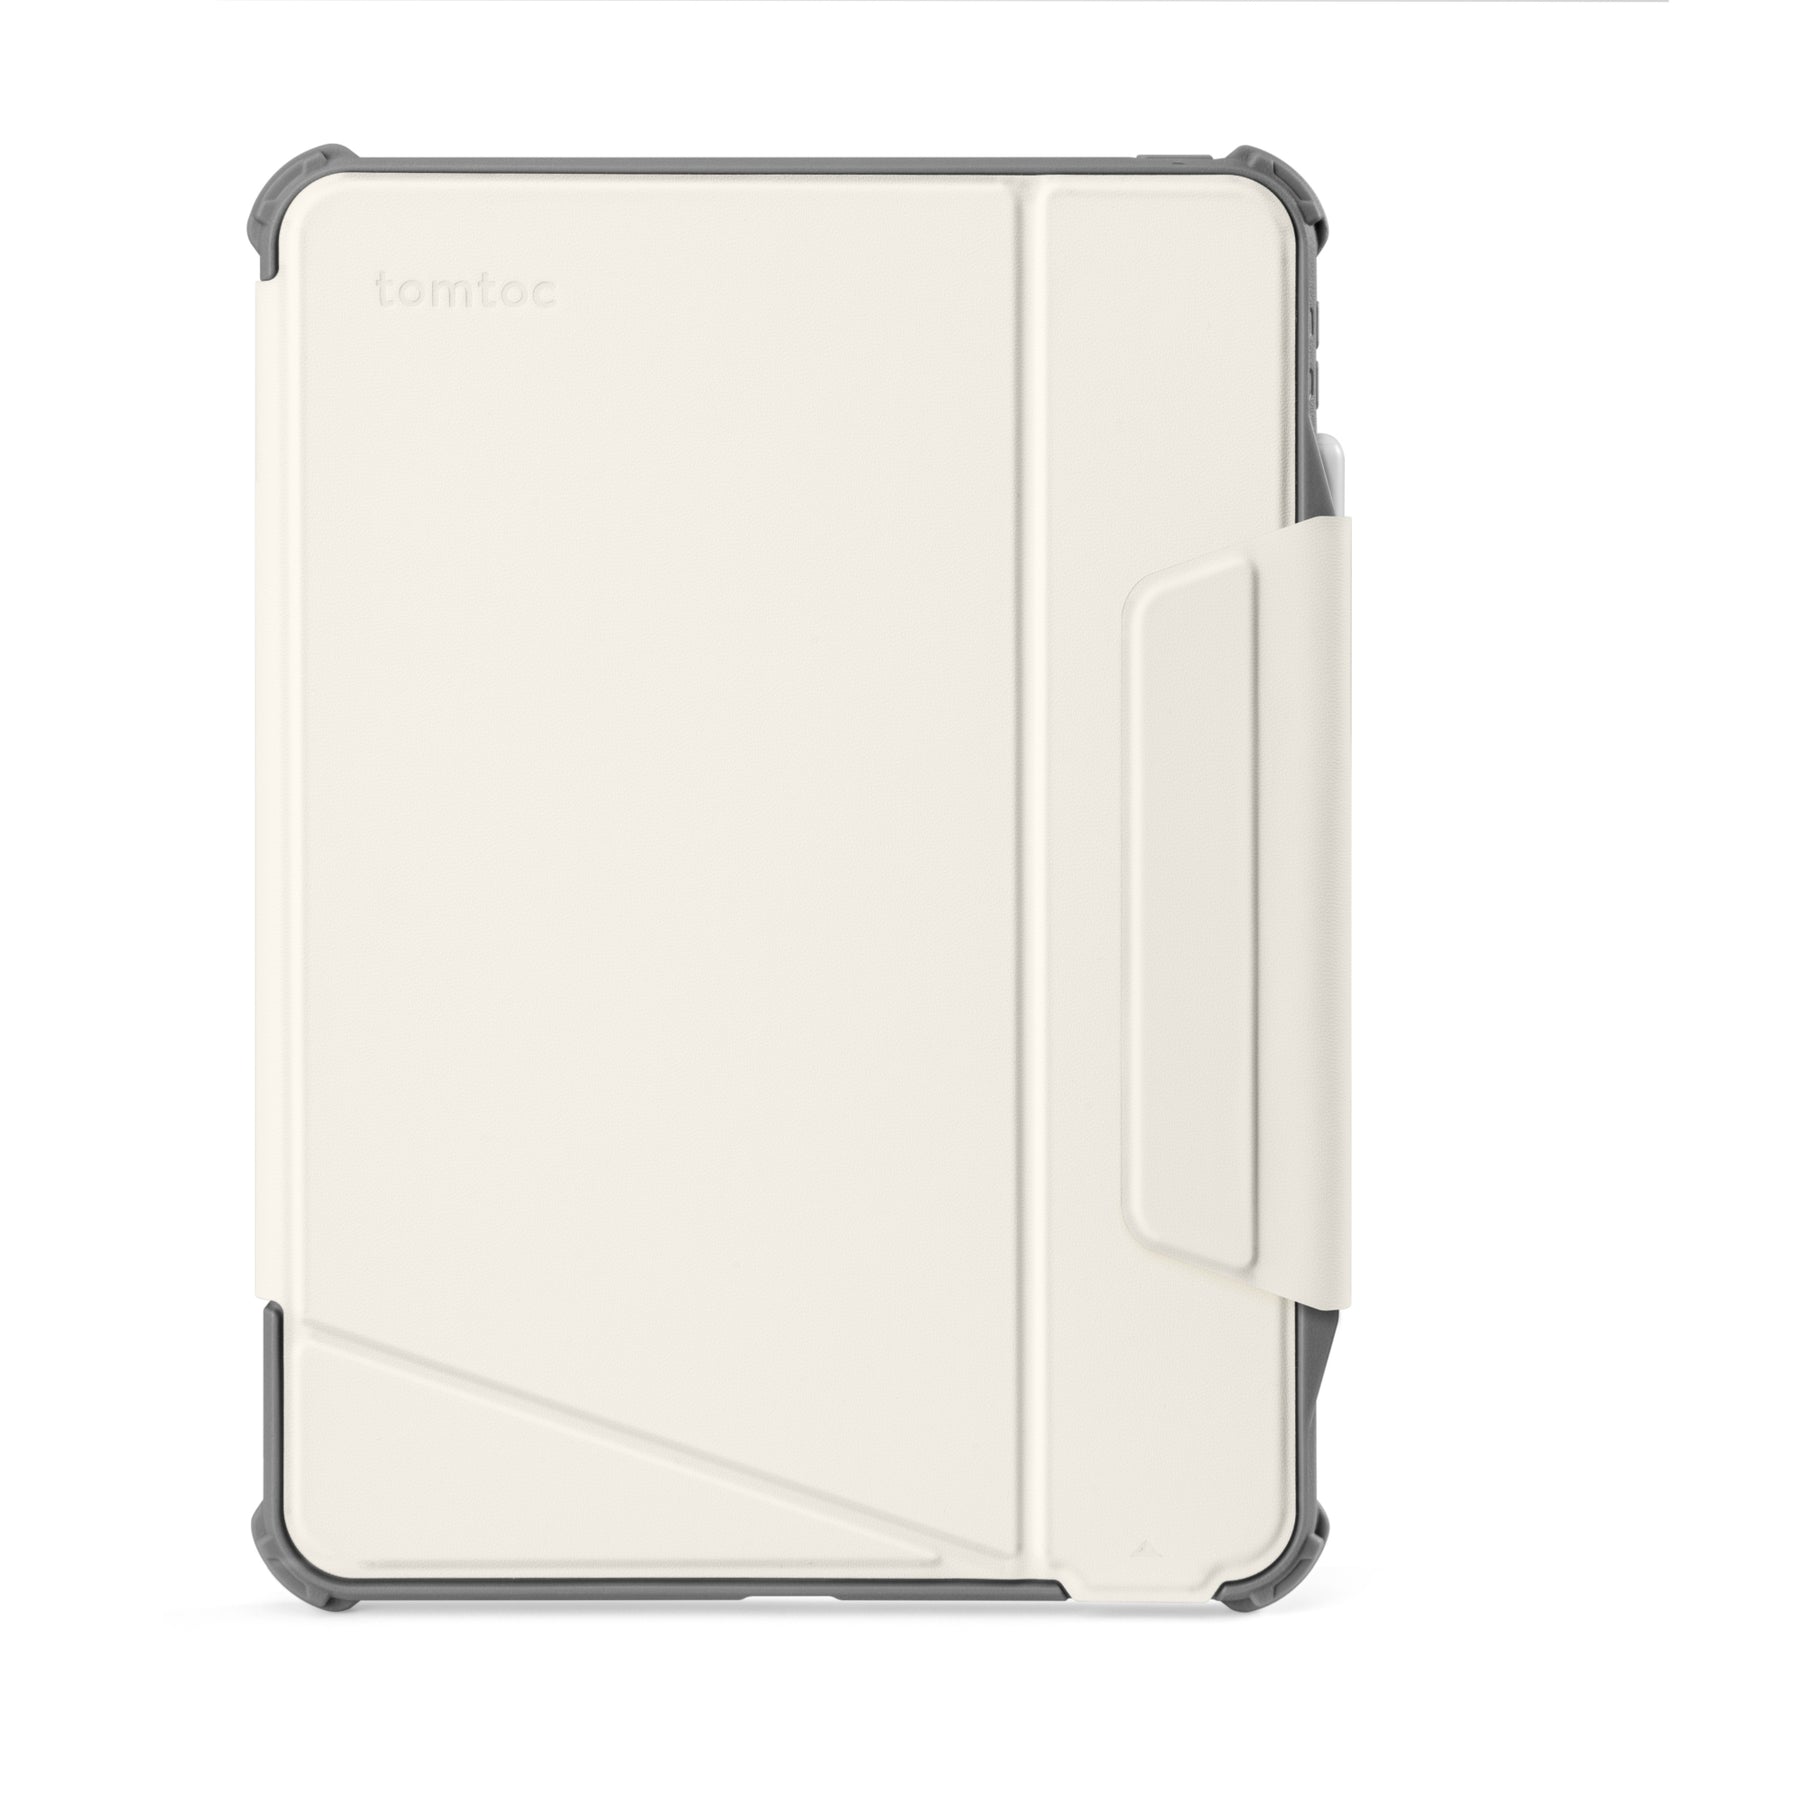 Inspire-B57 Detachable Ultra Case for 11-inch iPad Pro